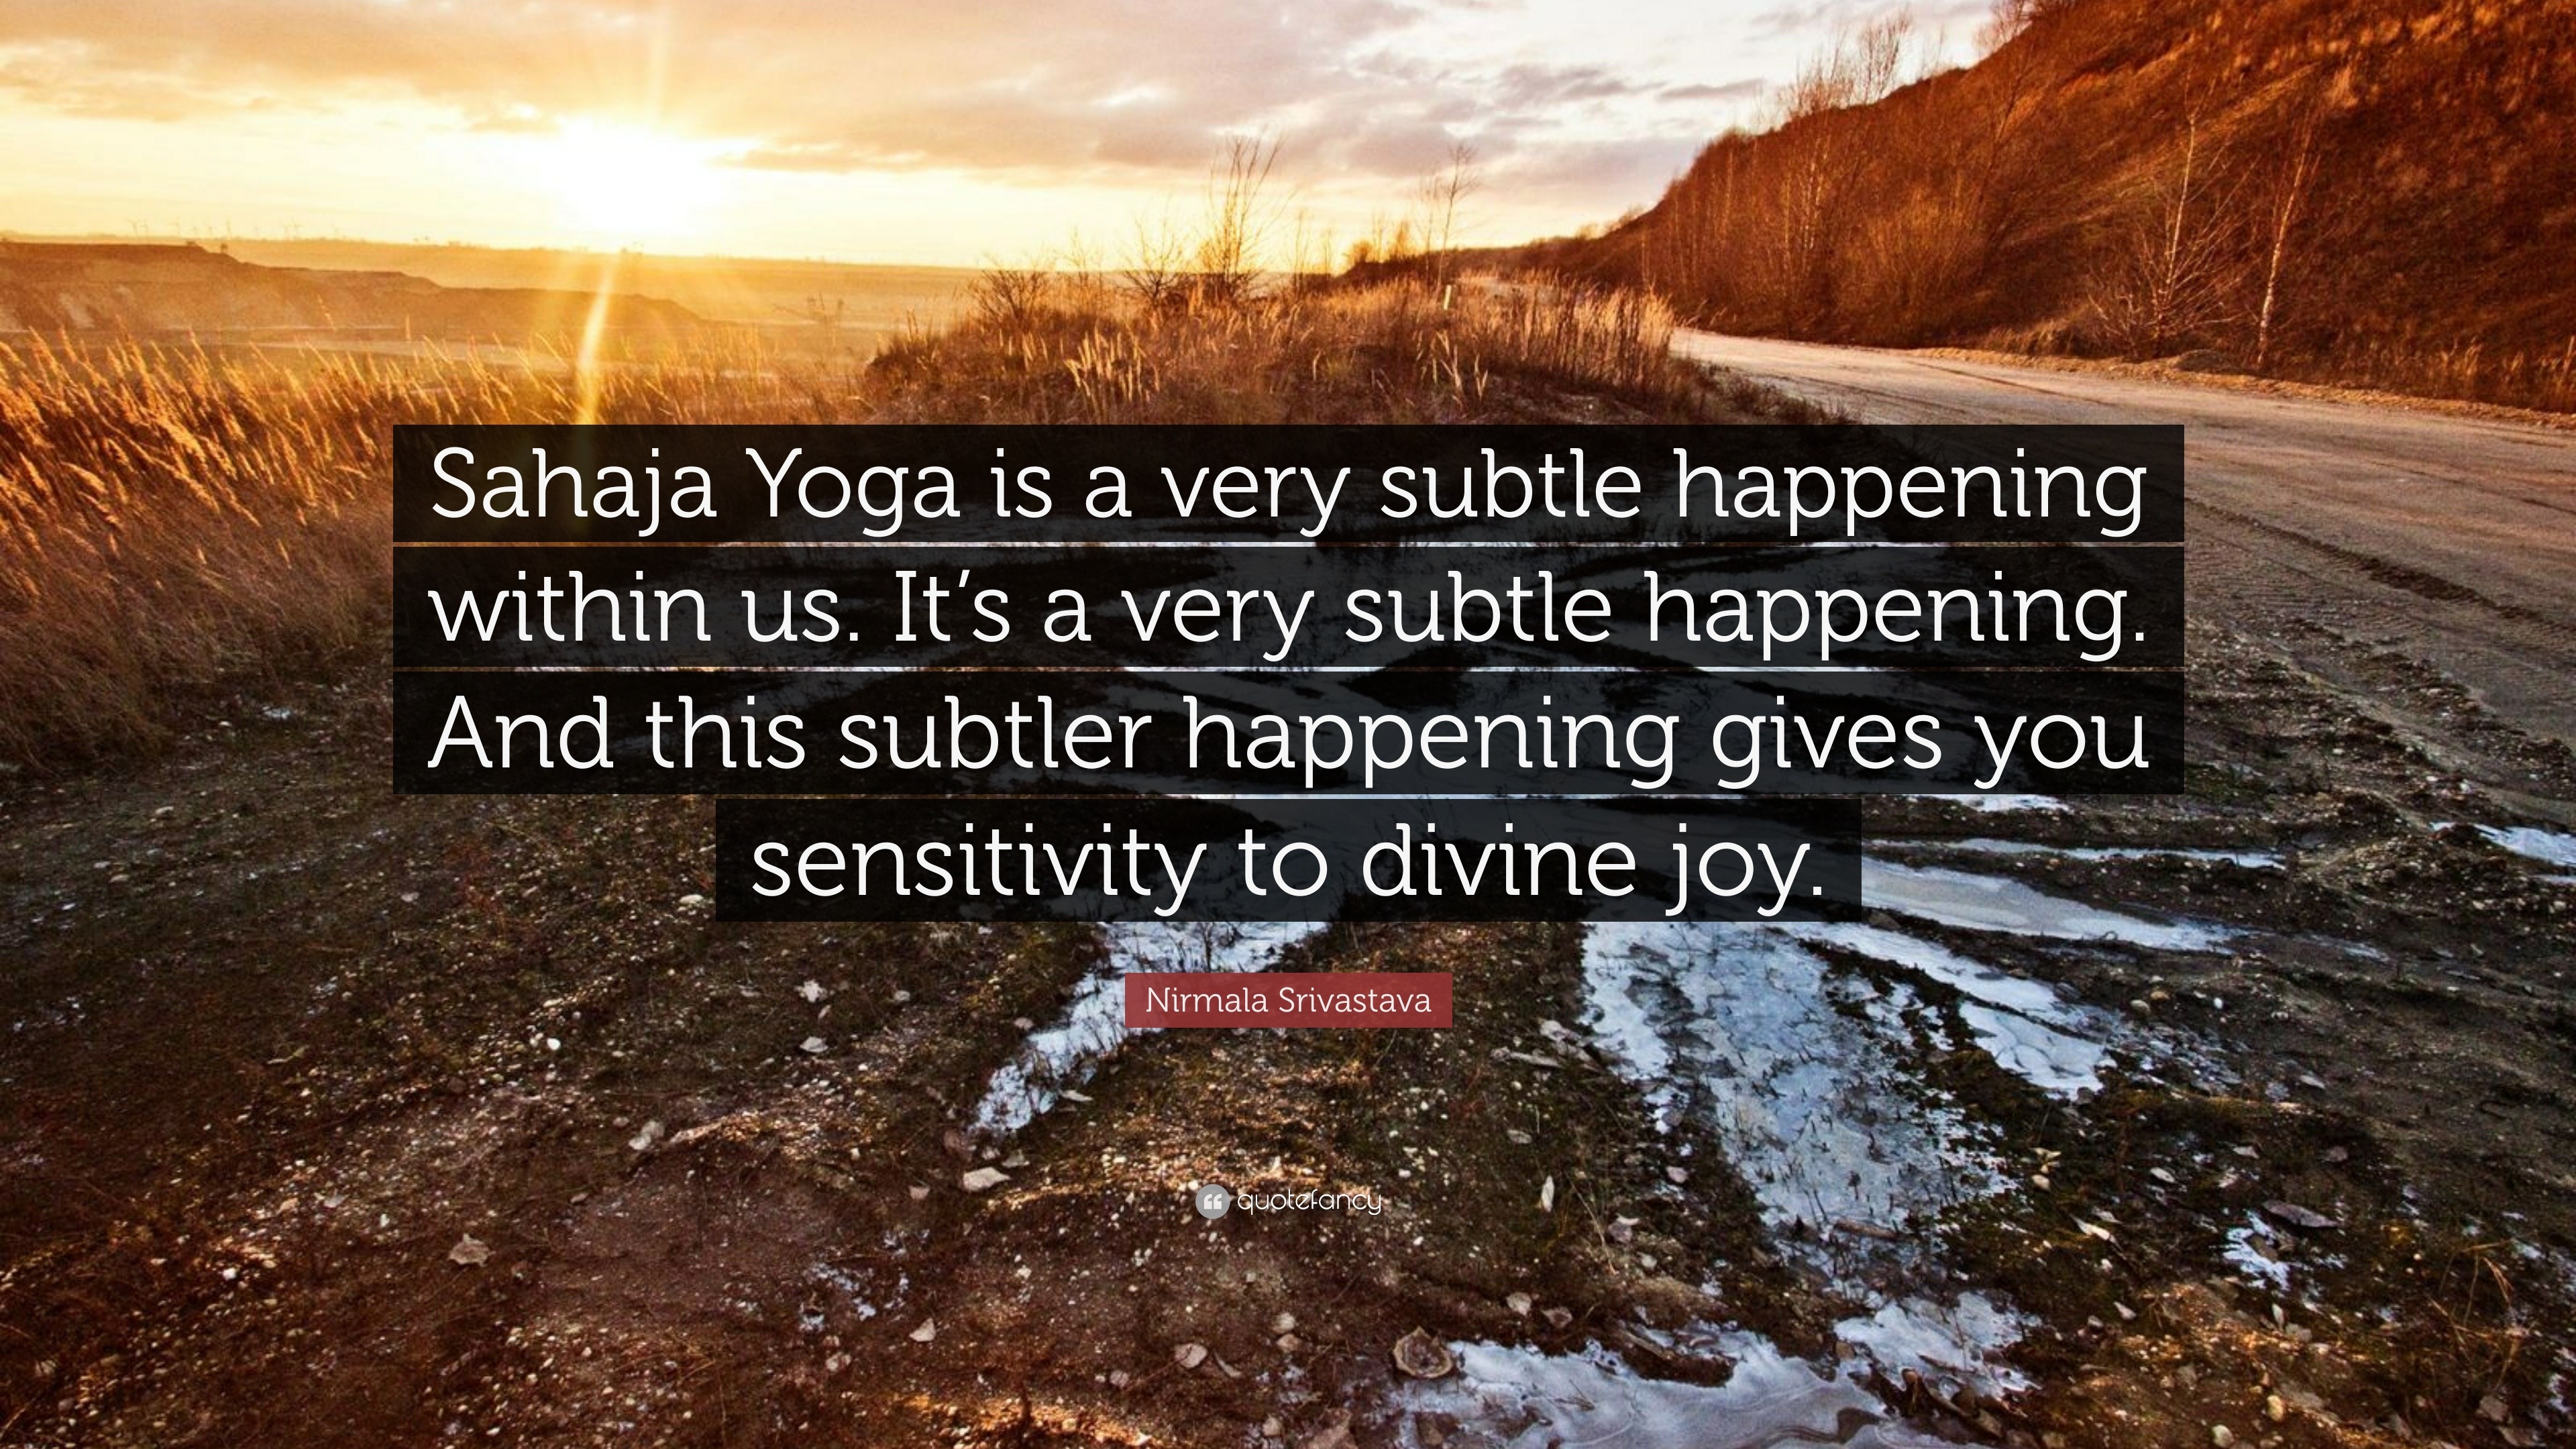 Nirmala Srivastava Quote: “Sahaja Yoga is a very subtle happening within  us. It's a very subtle happening. And this subtler happening gives you  sen...”